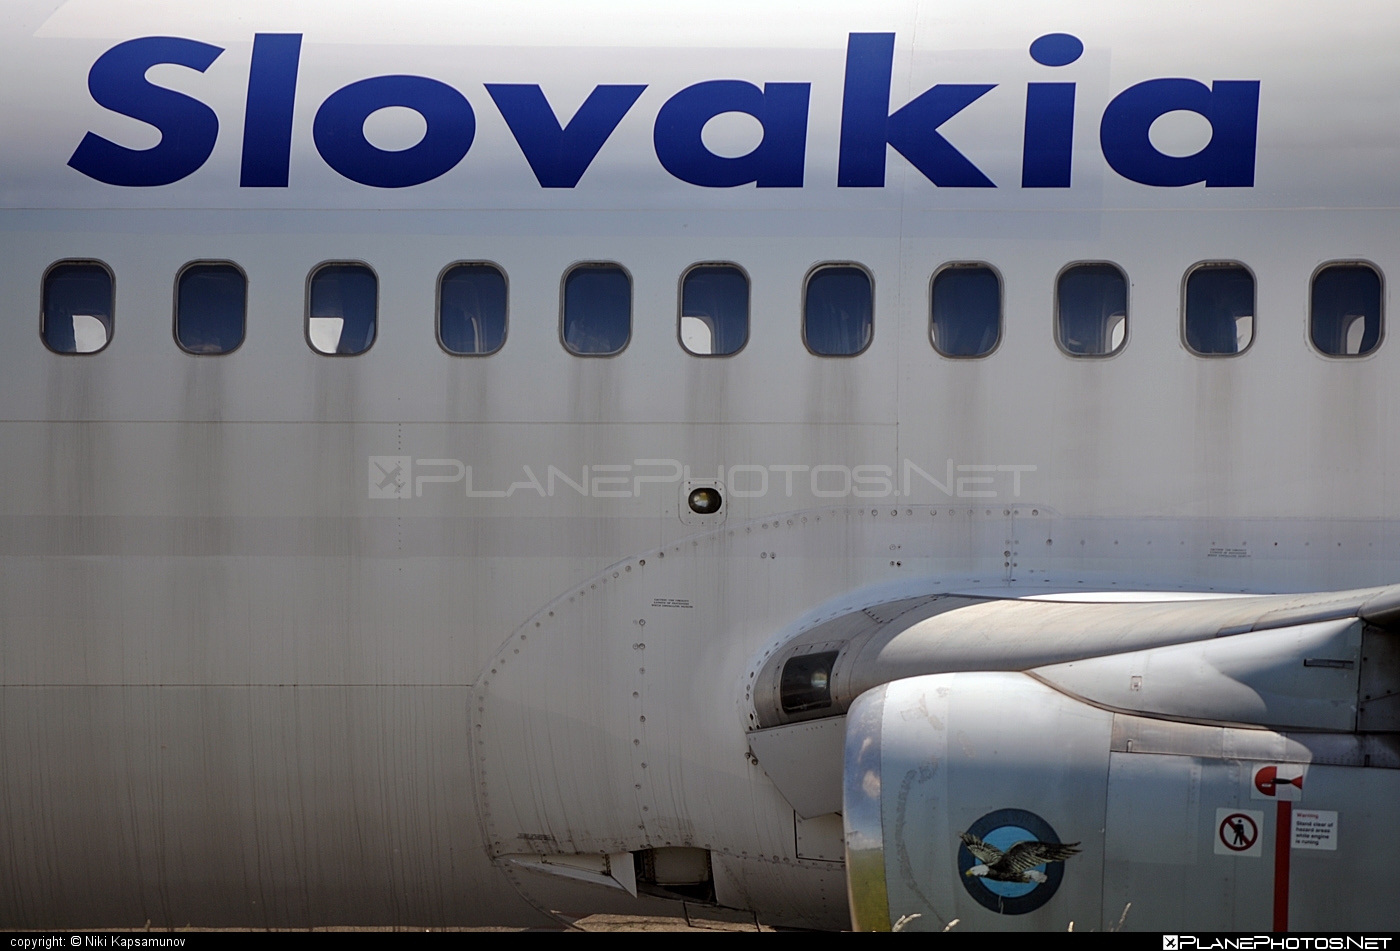 Boeing 737-200 - OM-RAN operated by Air Slovakia #b737 #boeing #boeing737